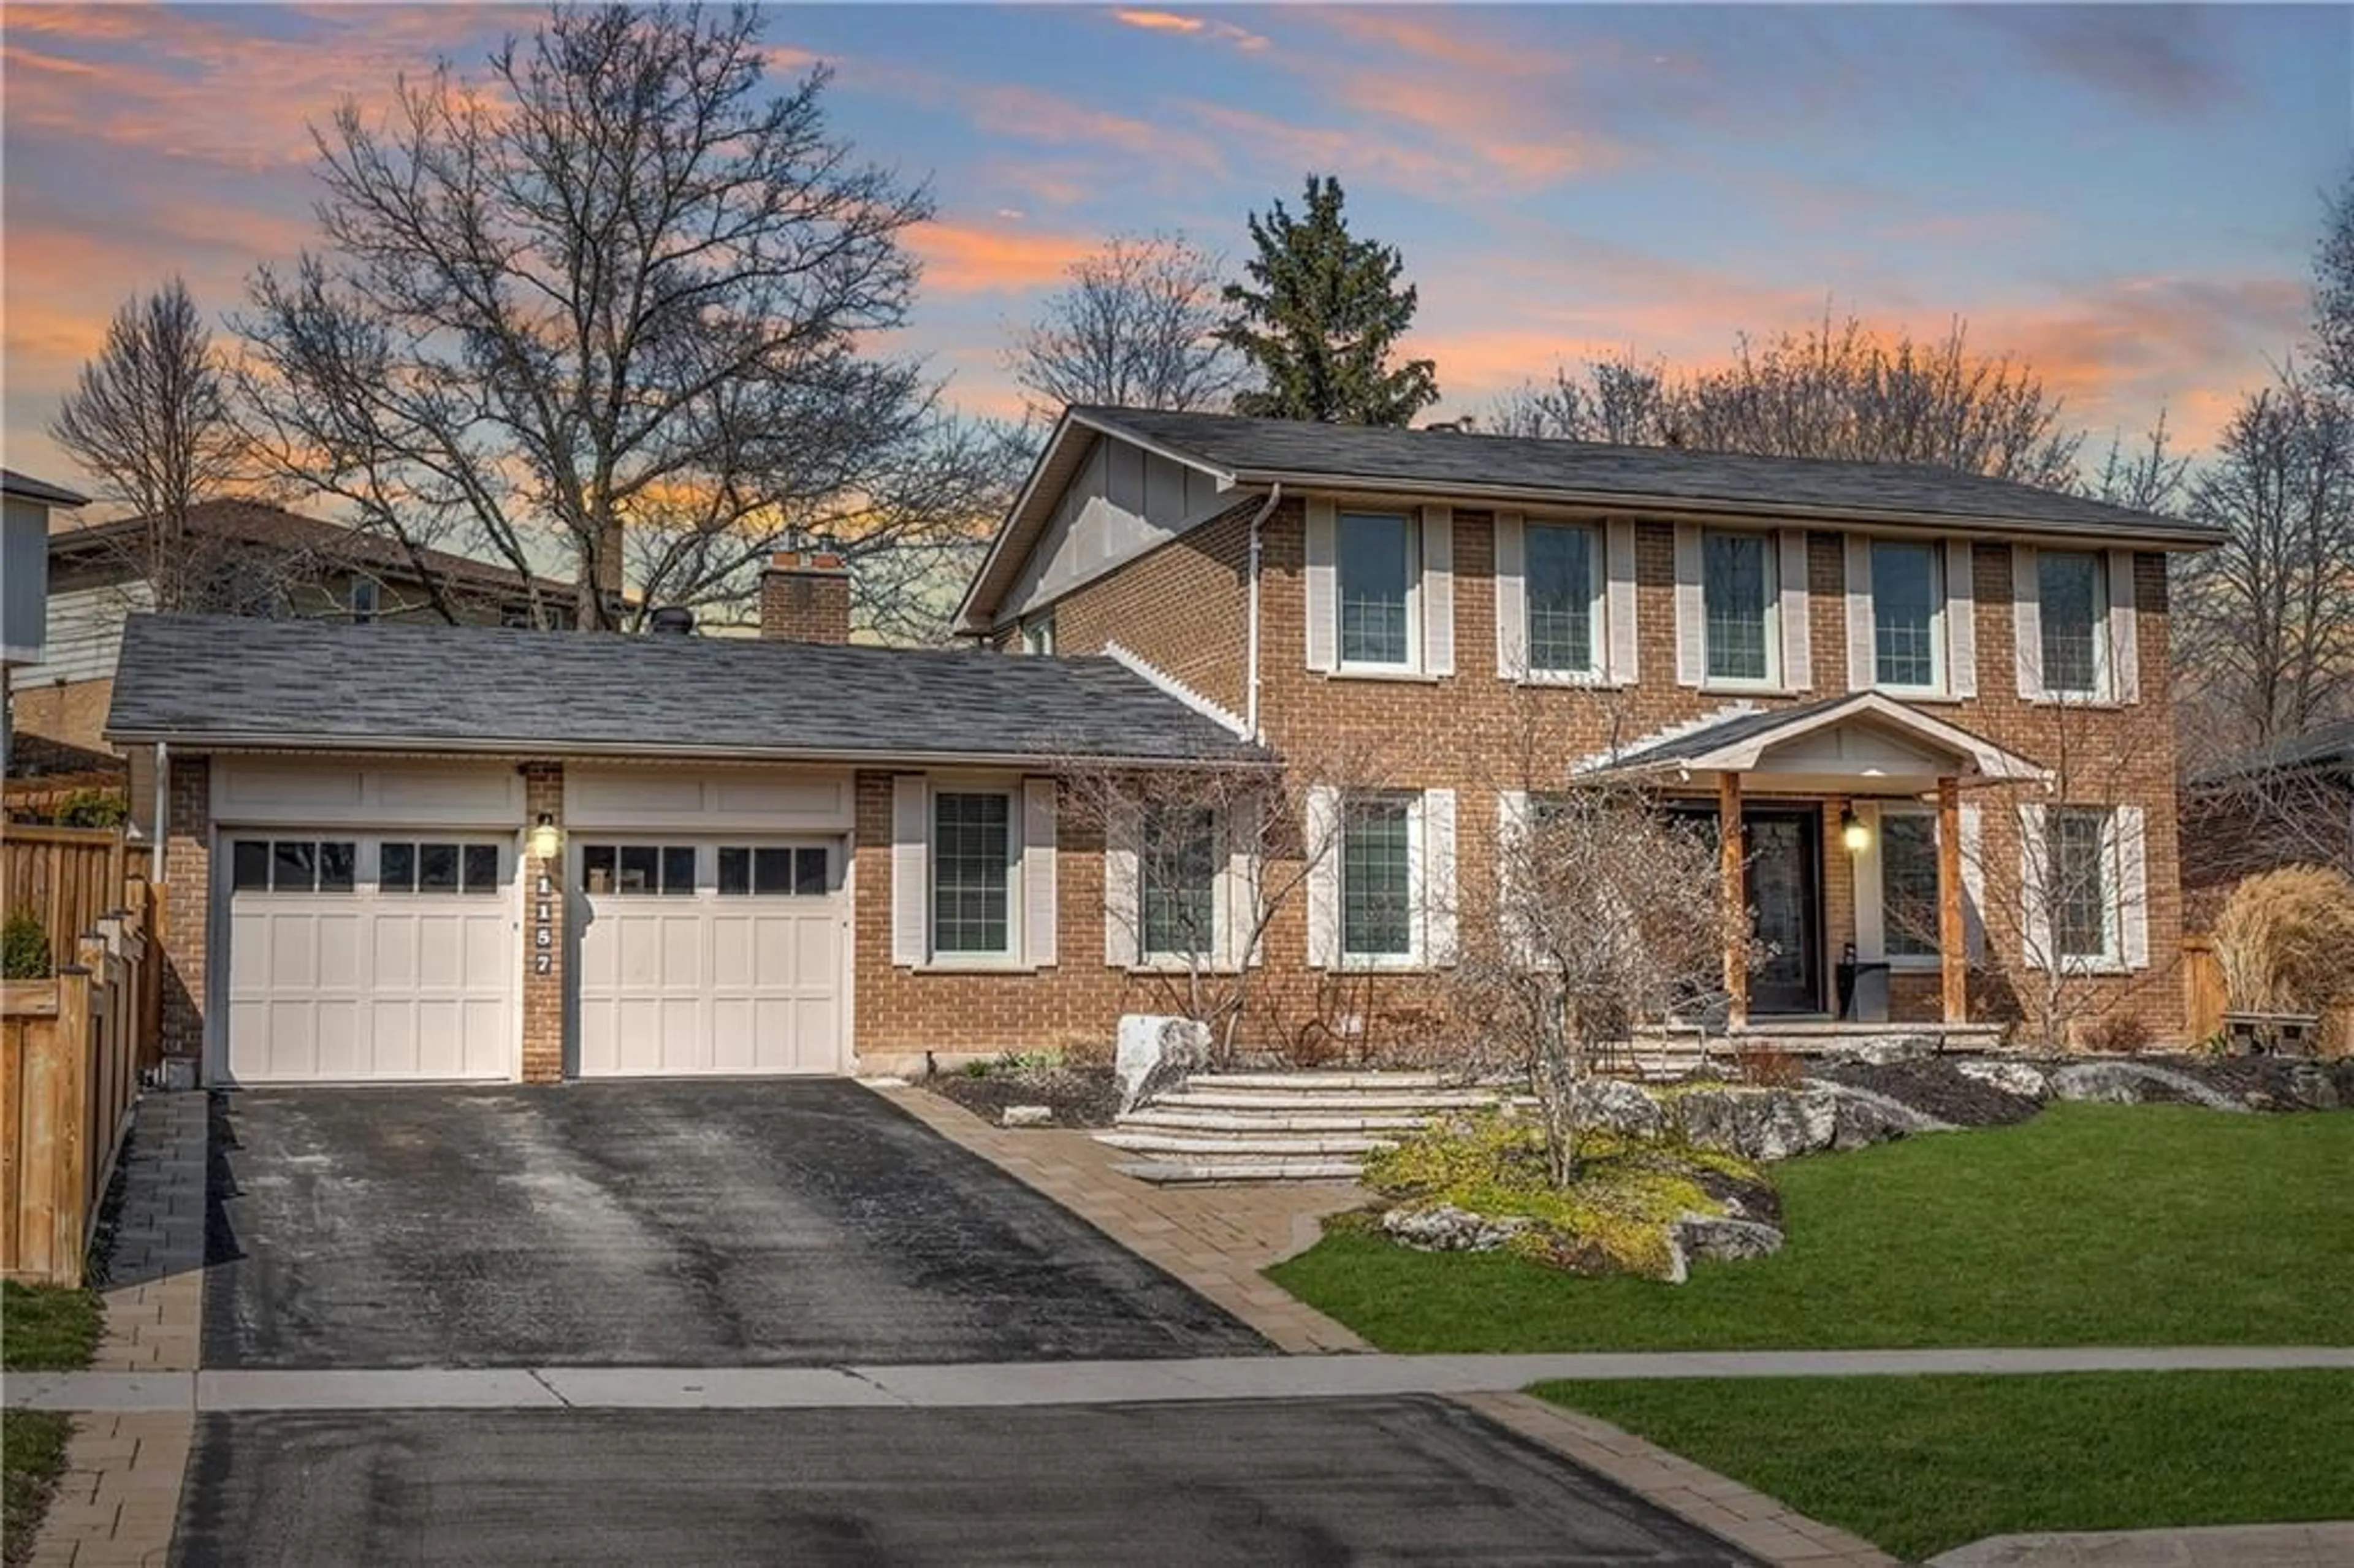 Home with brick exterior material for 1157 HAVENDALE Blvd, Burlington Ontario L7P 3K6